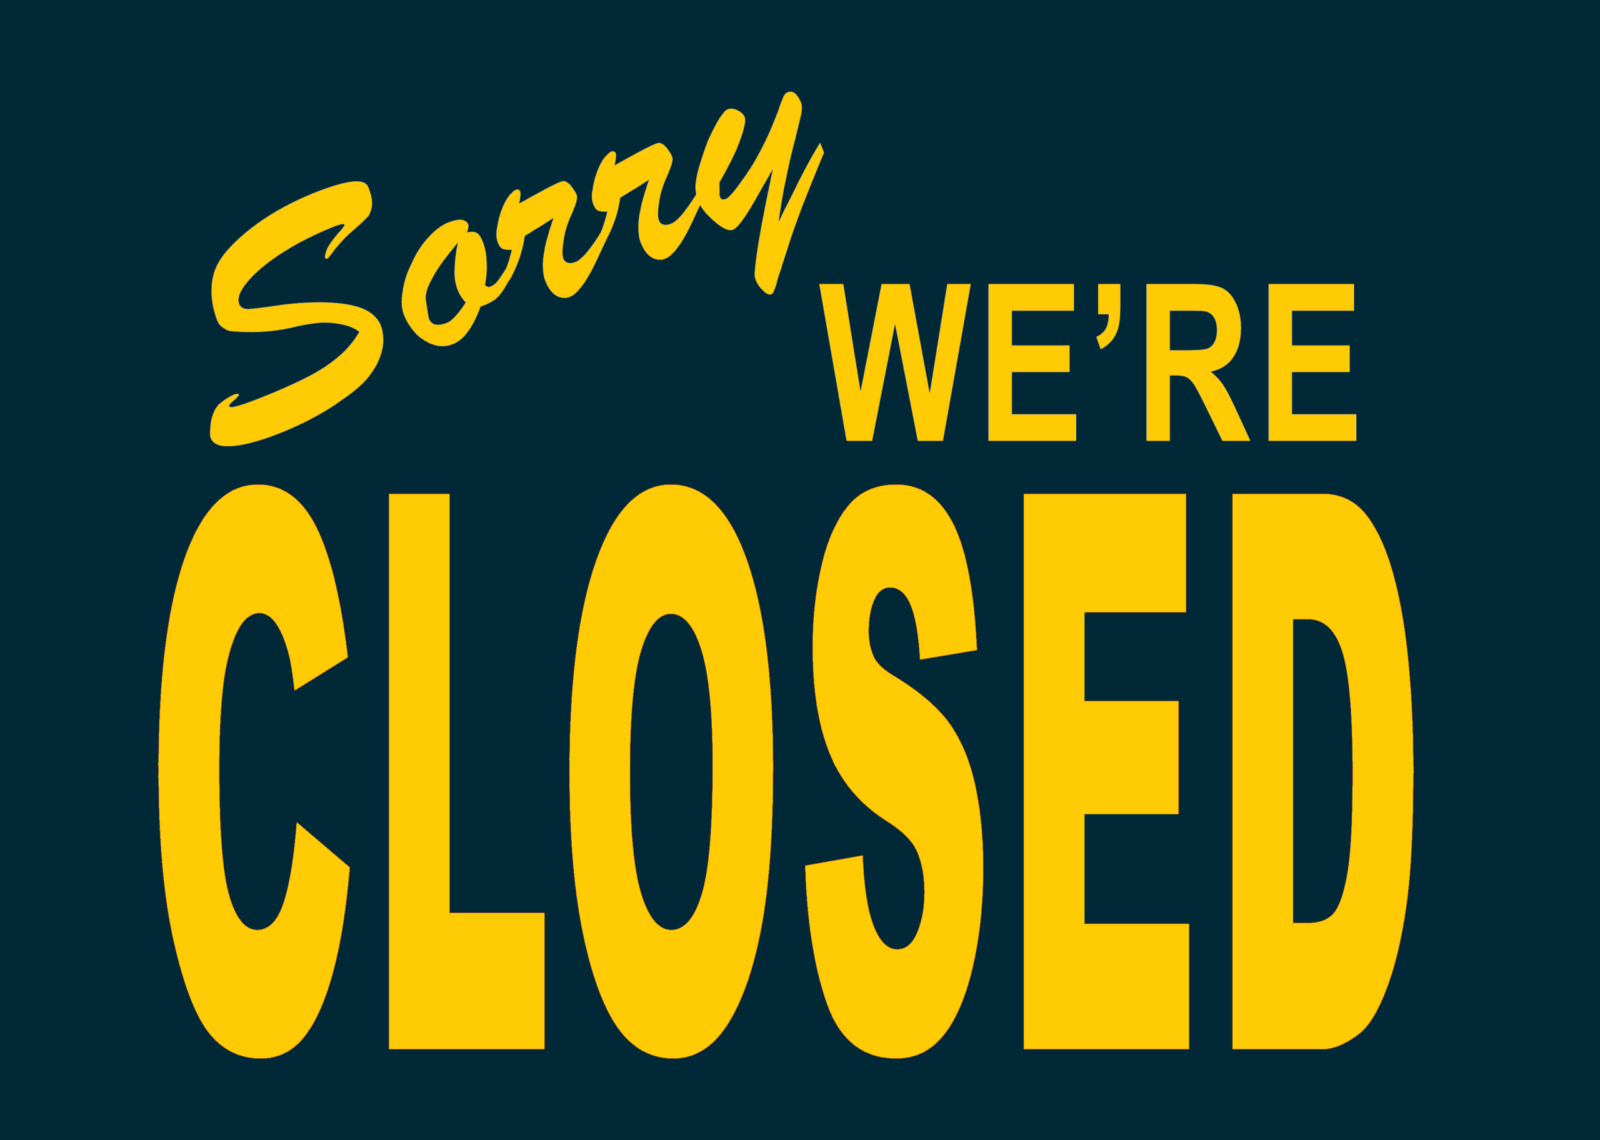 mensaje "sorry we're closed"